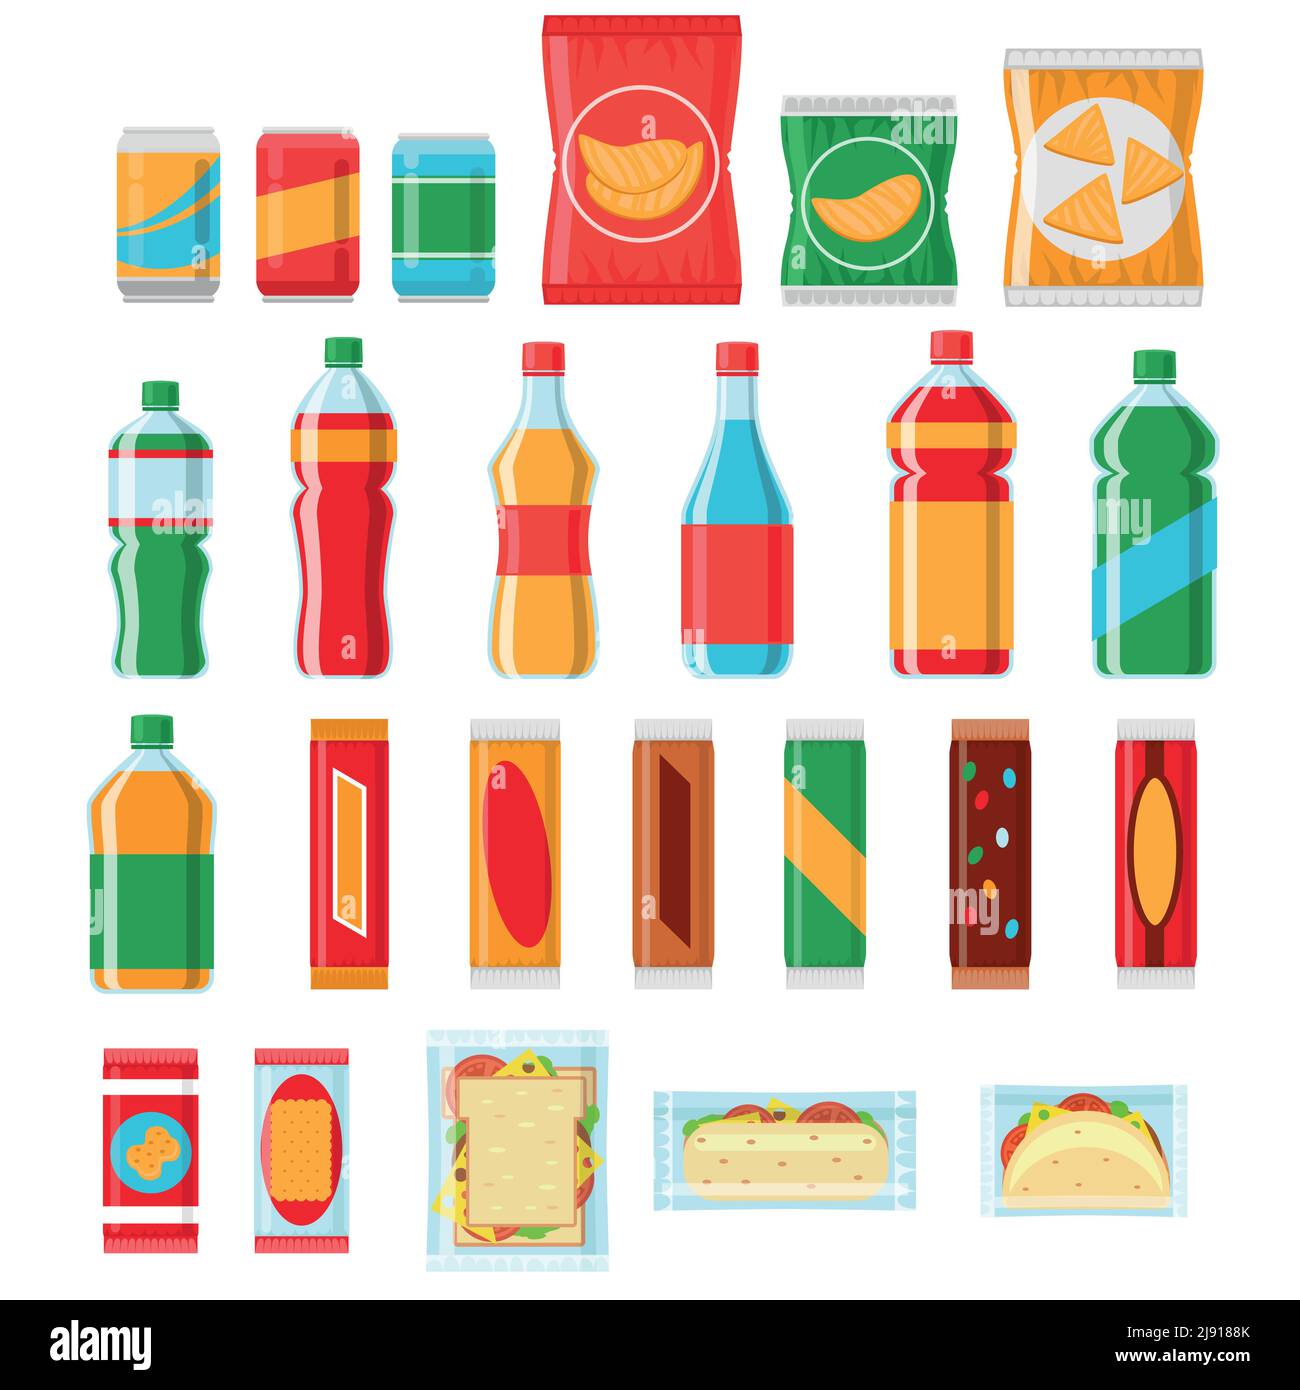 Fast-Food-Snacks und Getränke flach Vektor-Symbole. Verkaufsautomaten, Snack-Lebensmittel, Chip-Produkt, Pack Snack Illustration Stock Vektor